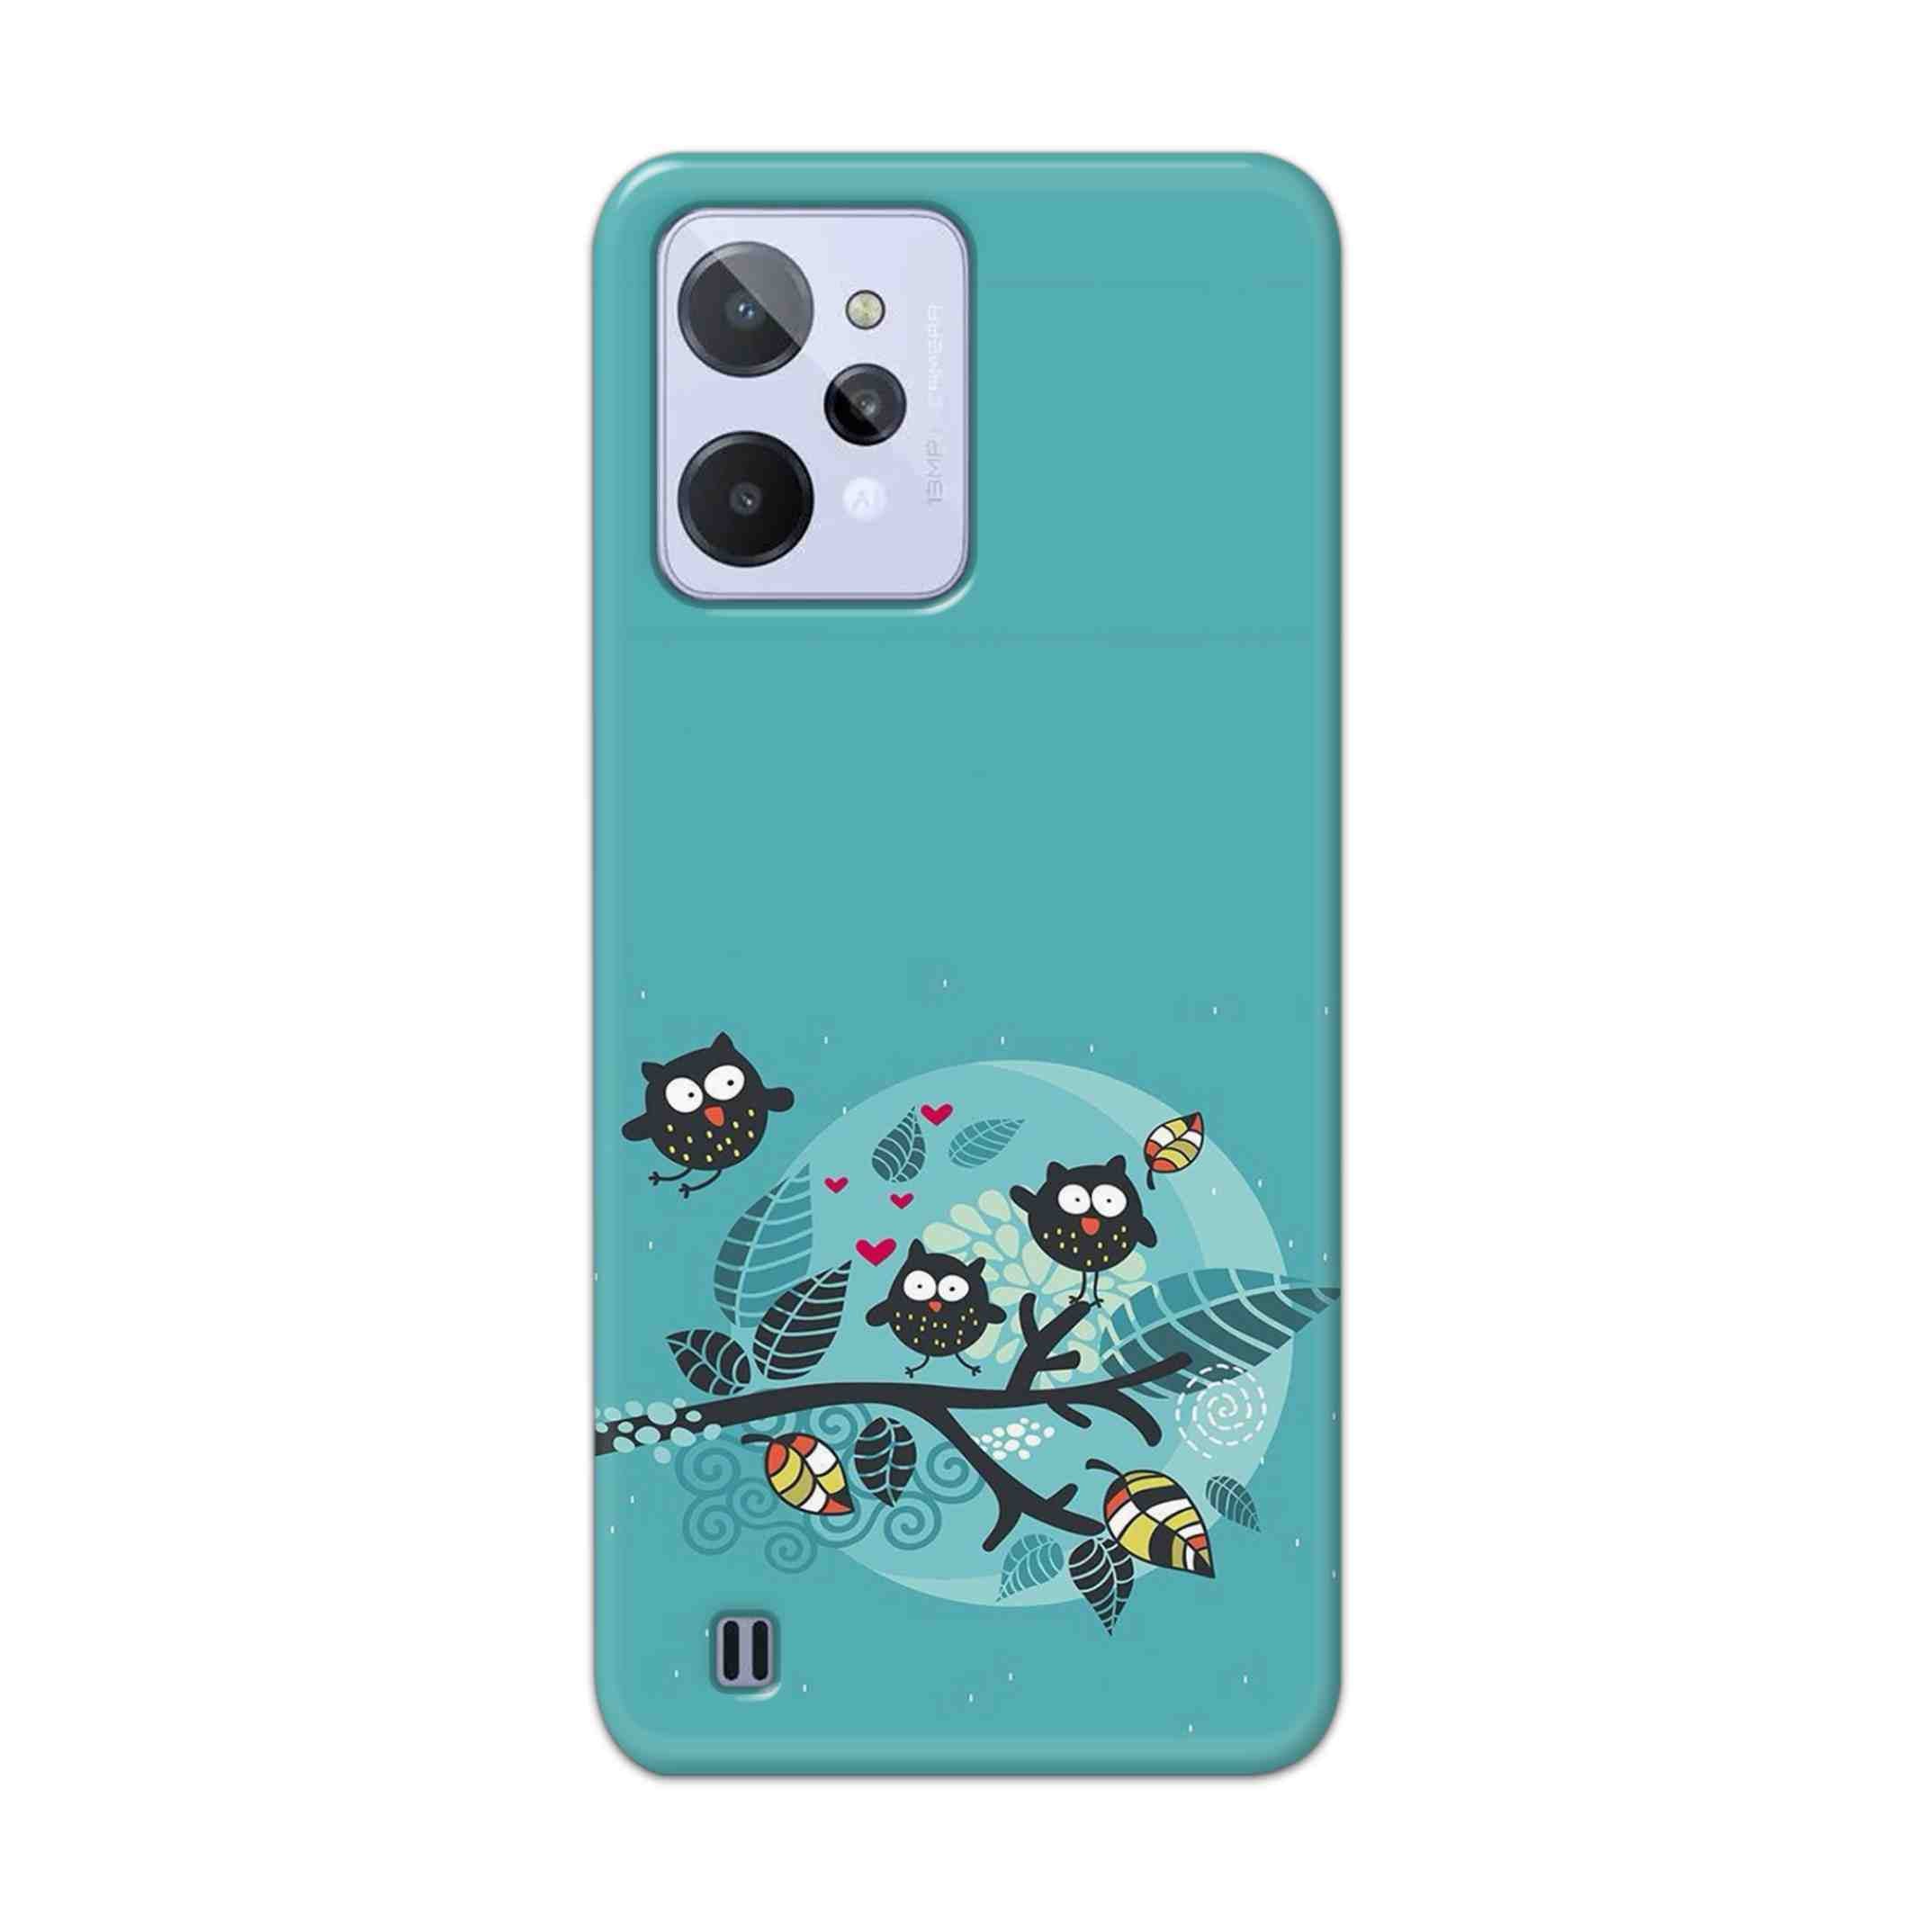 Buy Owl Hard Back Mobile Phone Case Cover For Realme C31 Online